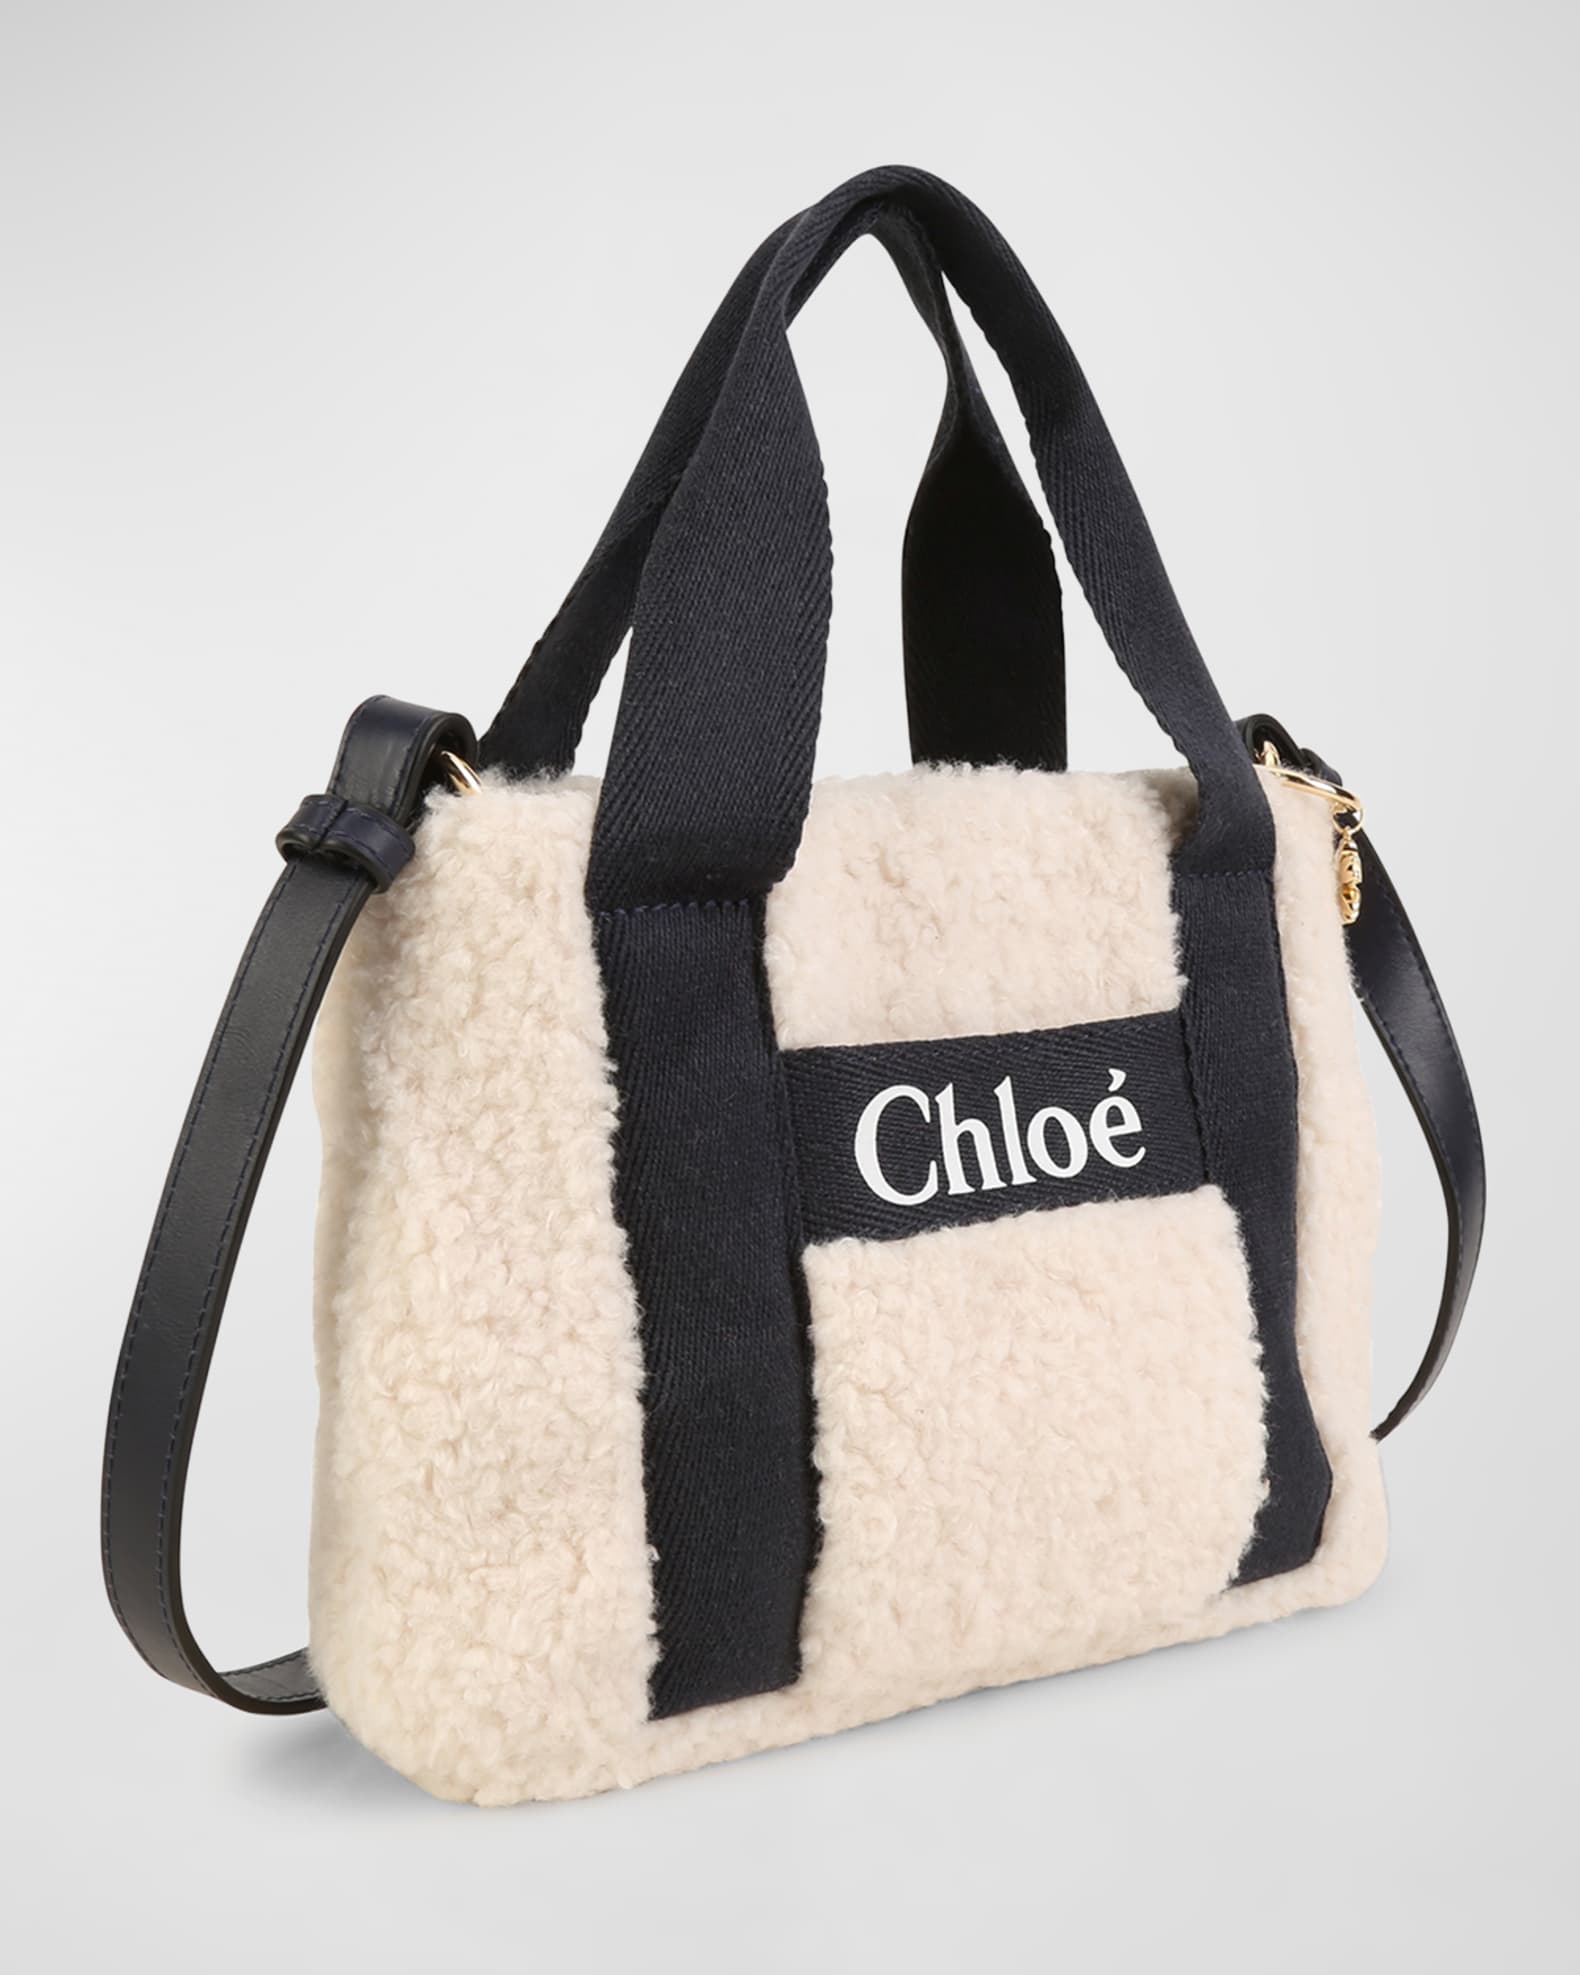 Chloé logo-print Tote Bag - Neutrals